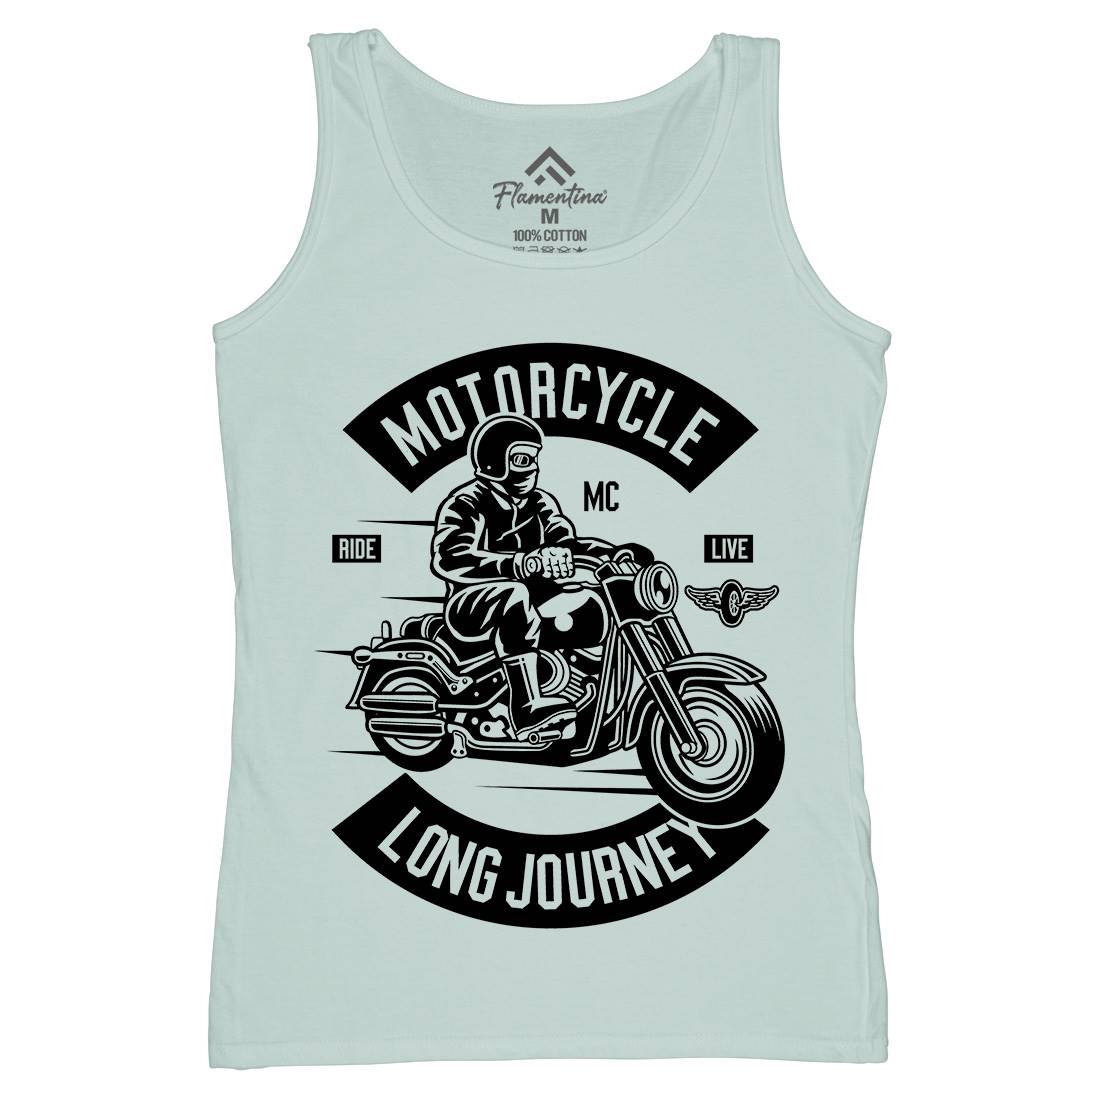 Long Journey Womens Organic Tank Top Vest Motorcycles B583